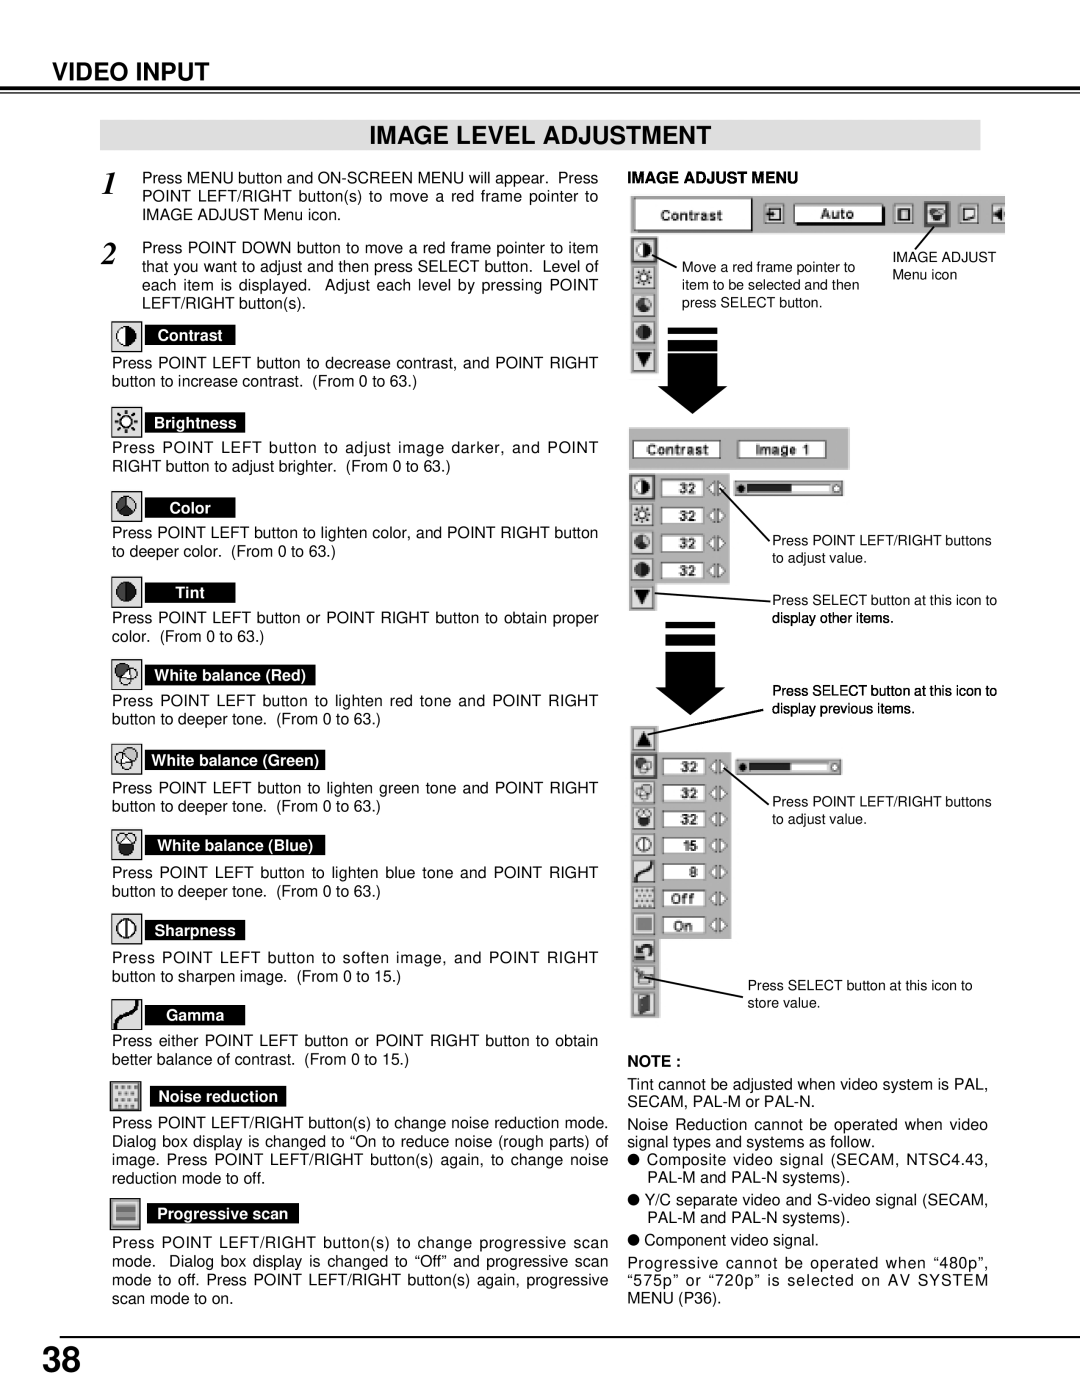 Eiki LC-UXT1 instruction manual Video Input Image Level Adjustment, Image Adjust Menu 